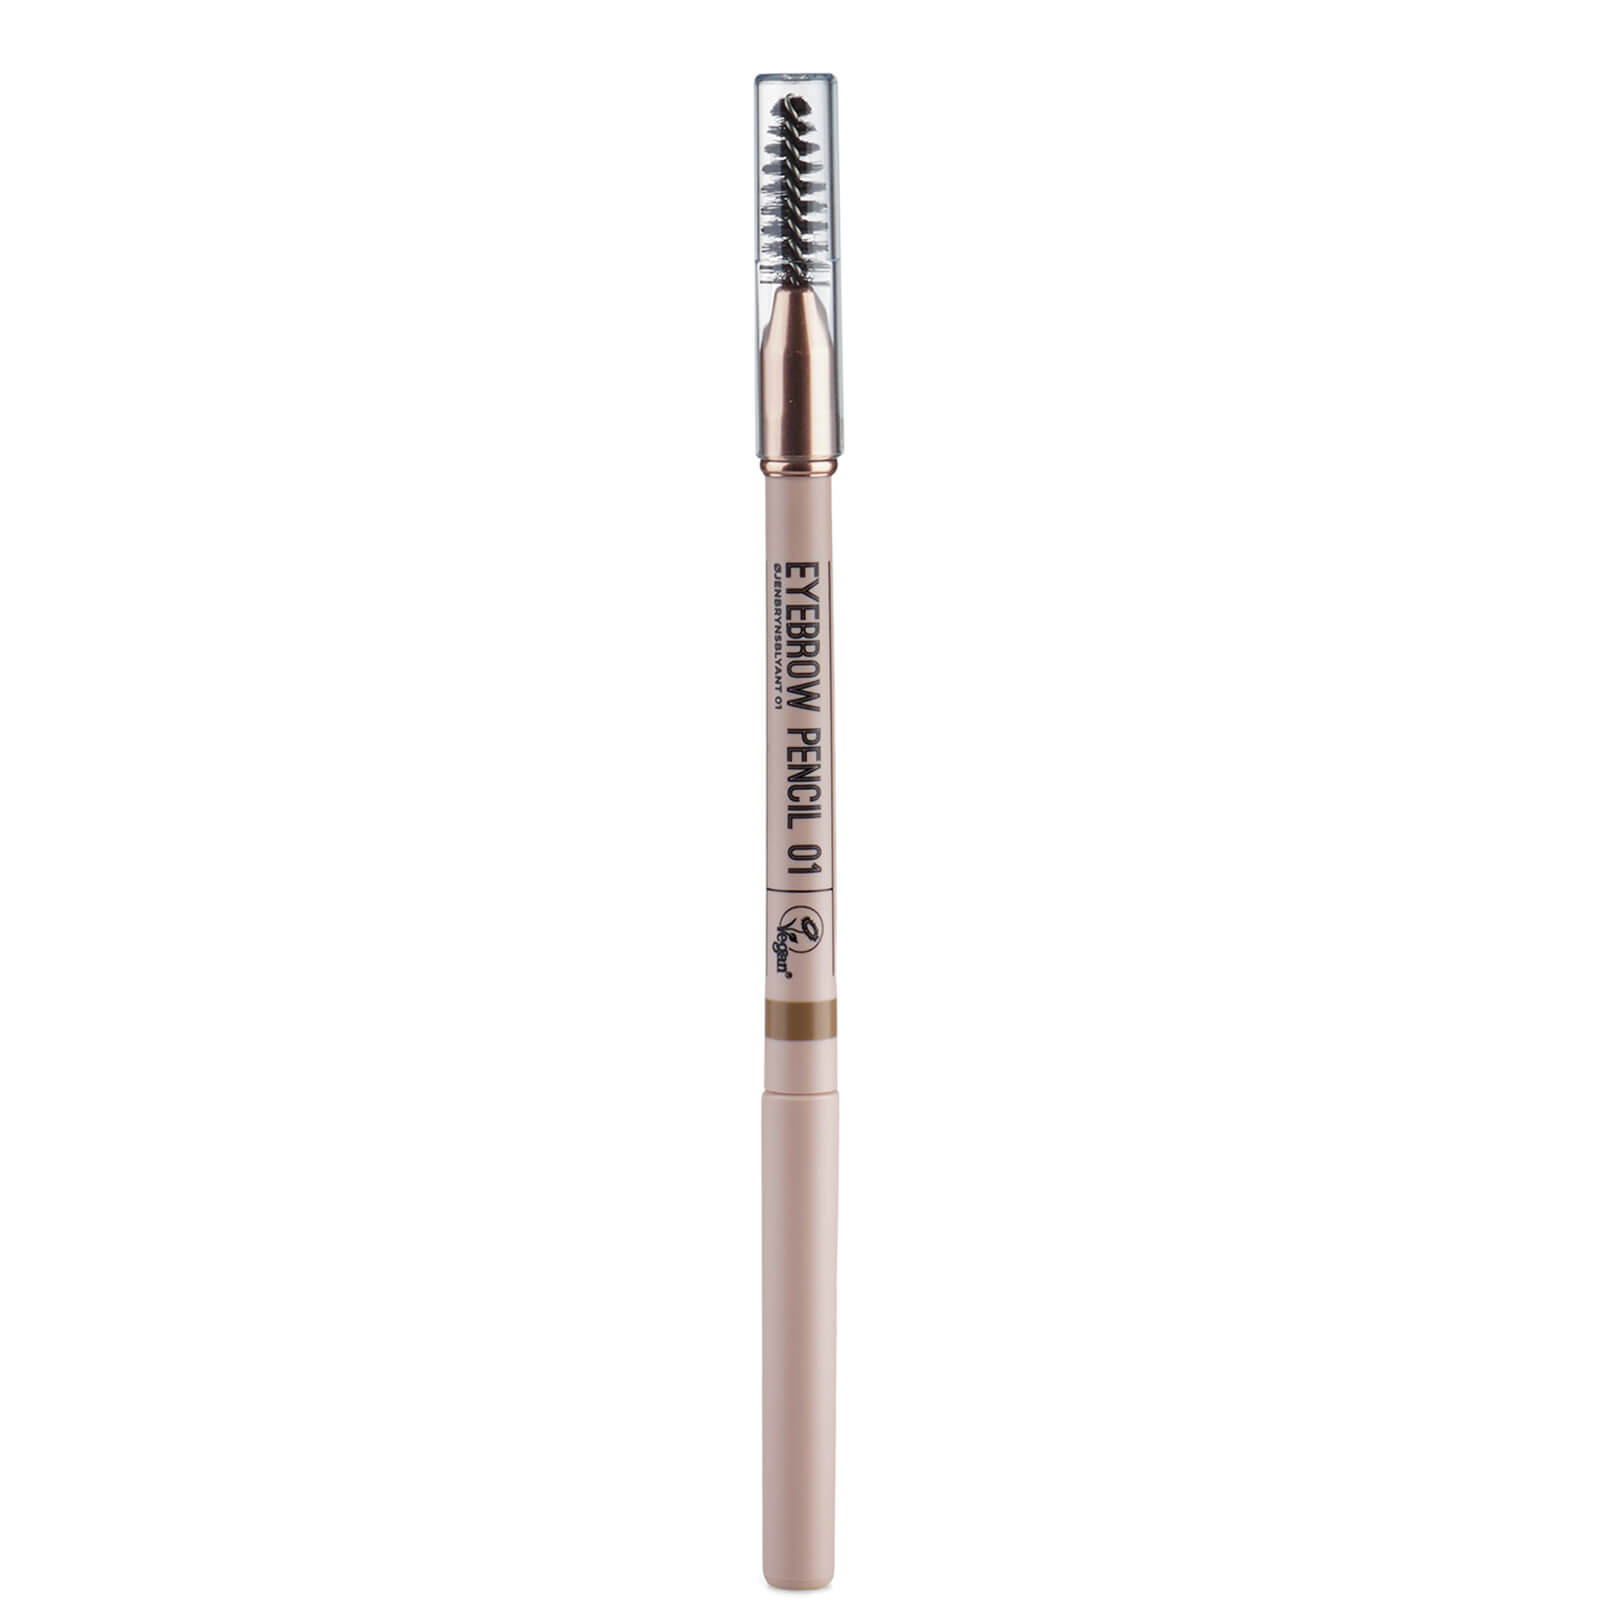 Ecooking Eyebrow Pencil 1.1g (Various Shades) - 01 Taupe